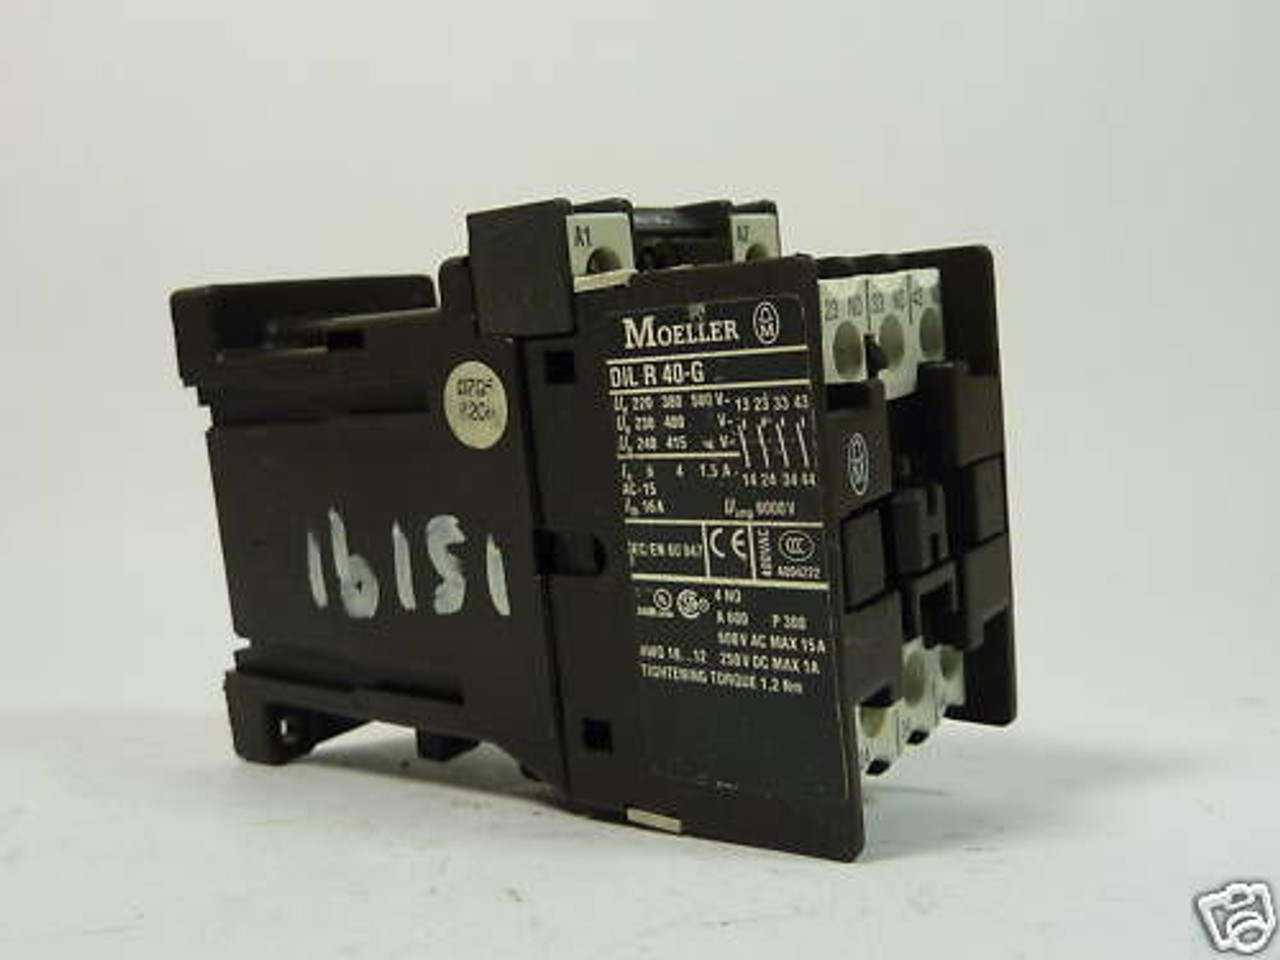 MOELLER RELAY CONTROL 15AMP 24VDC DIL R 40-G USED